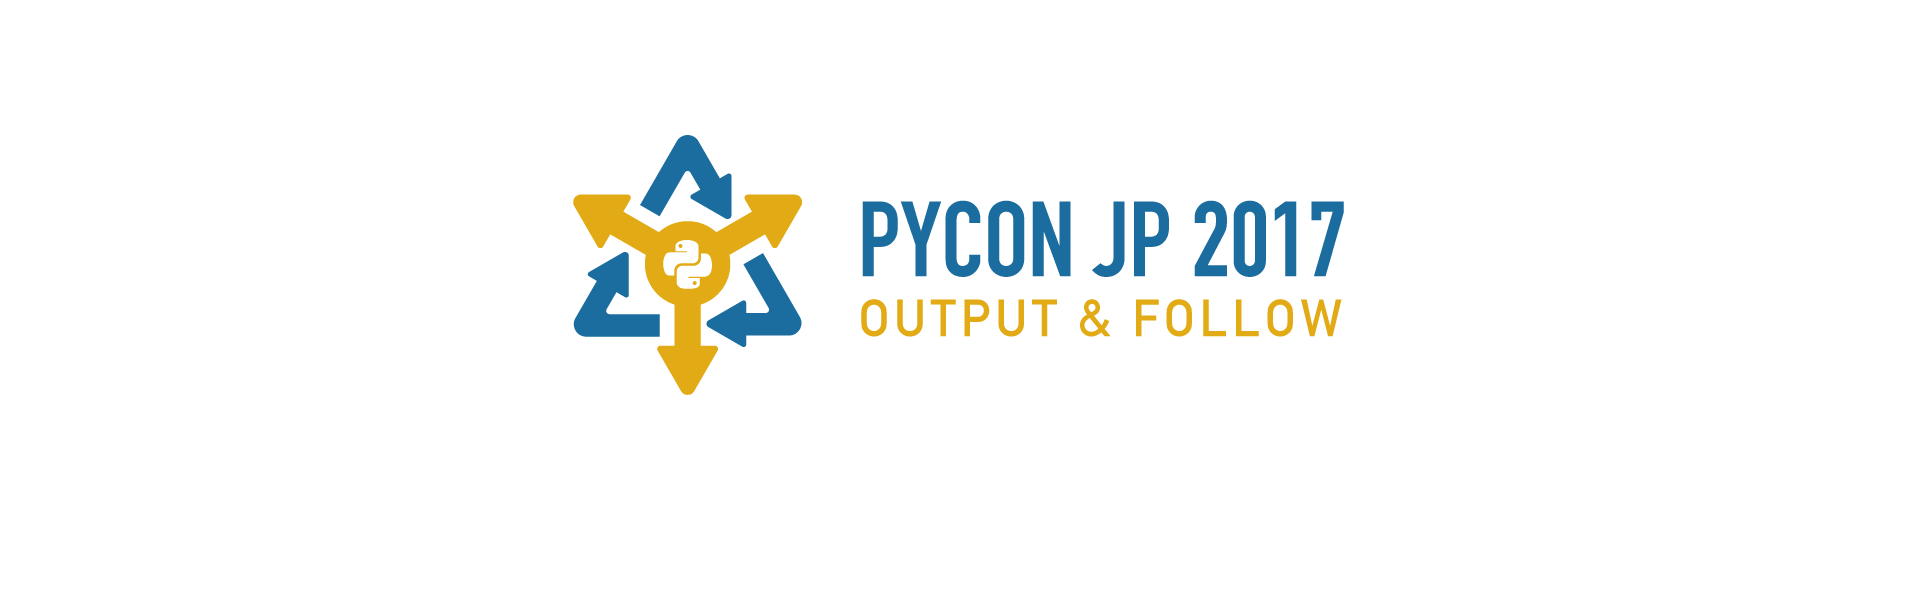 PyCon JP 2017 ロゴ